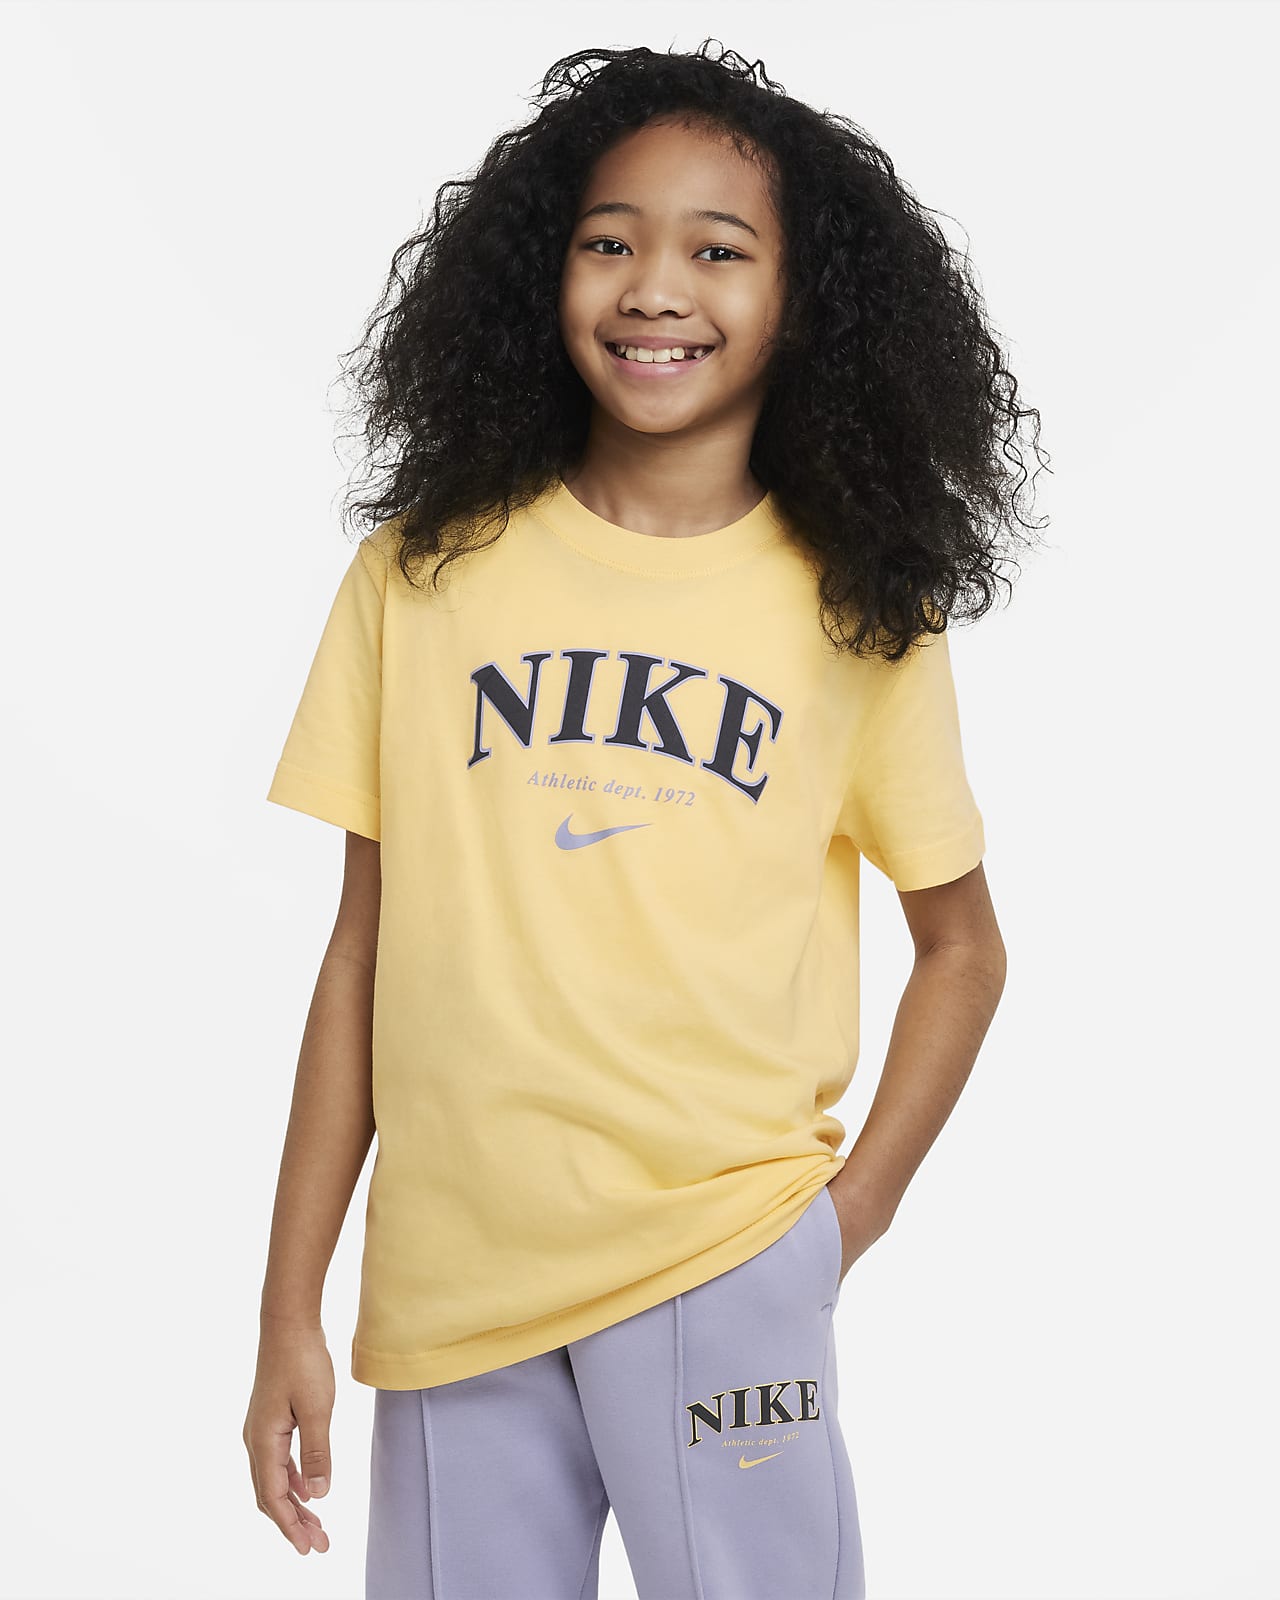 Auto fusion Produktiv Nike Sportswear-T-shirt til større børn (piger). Nike DK